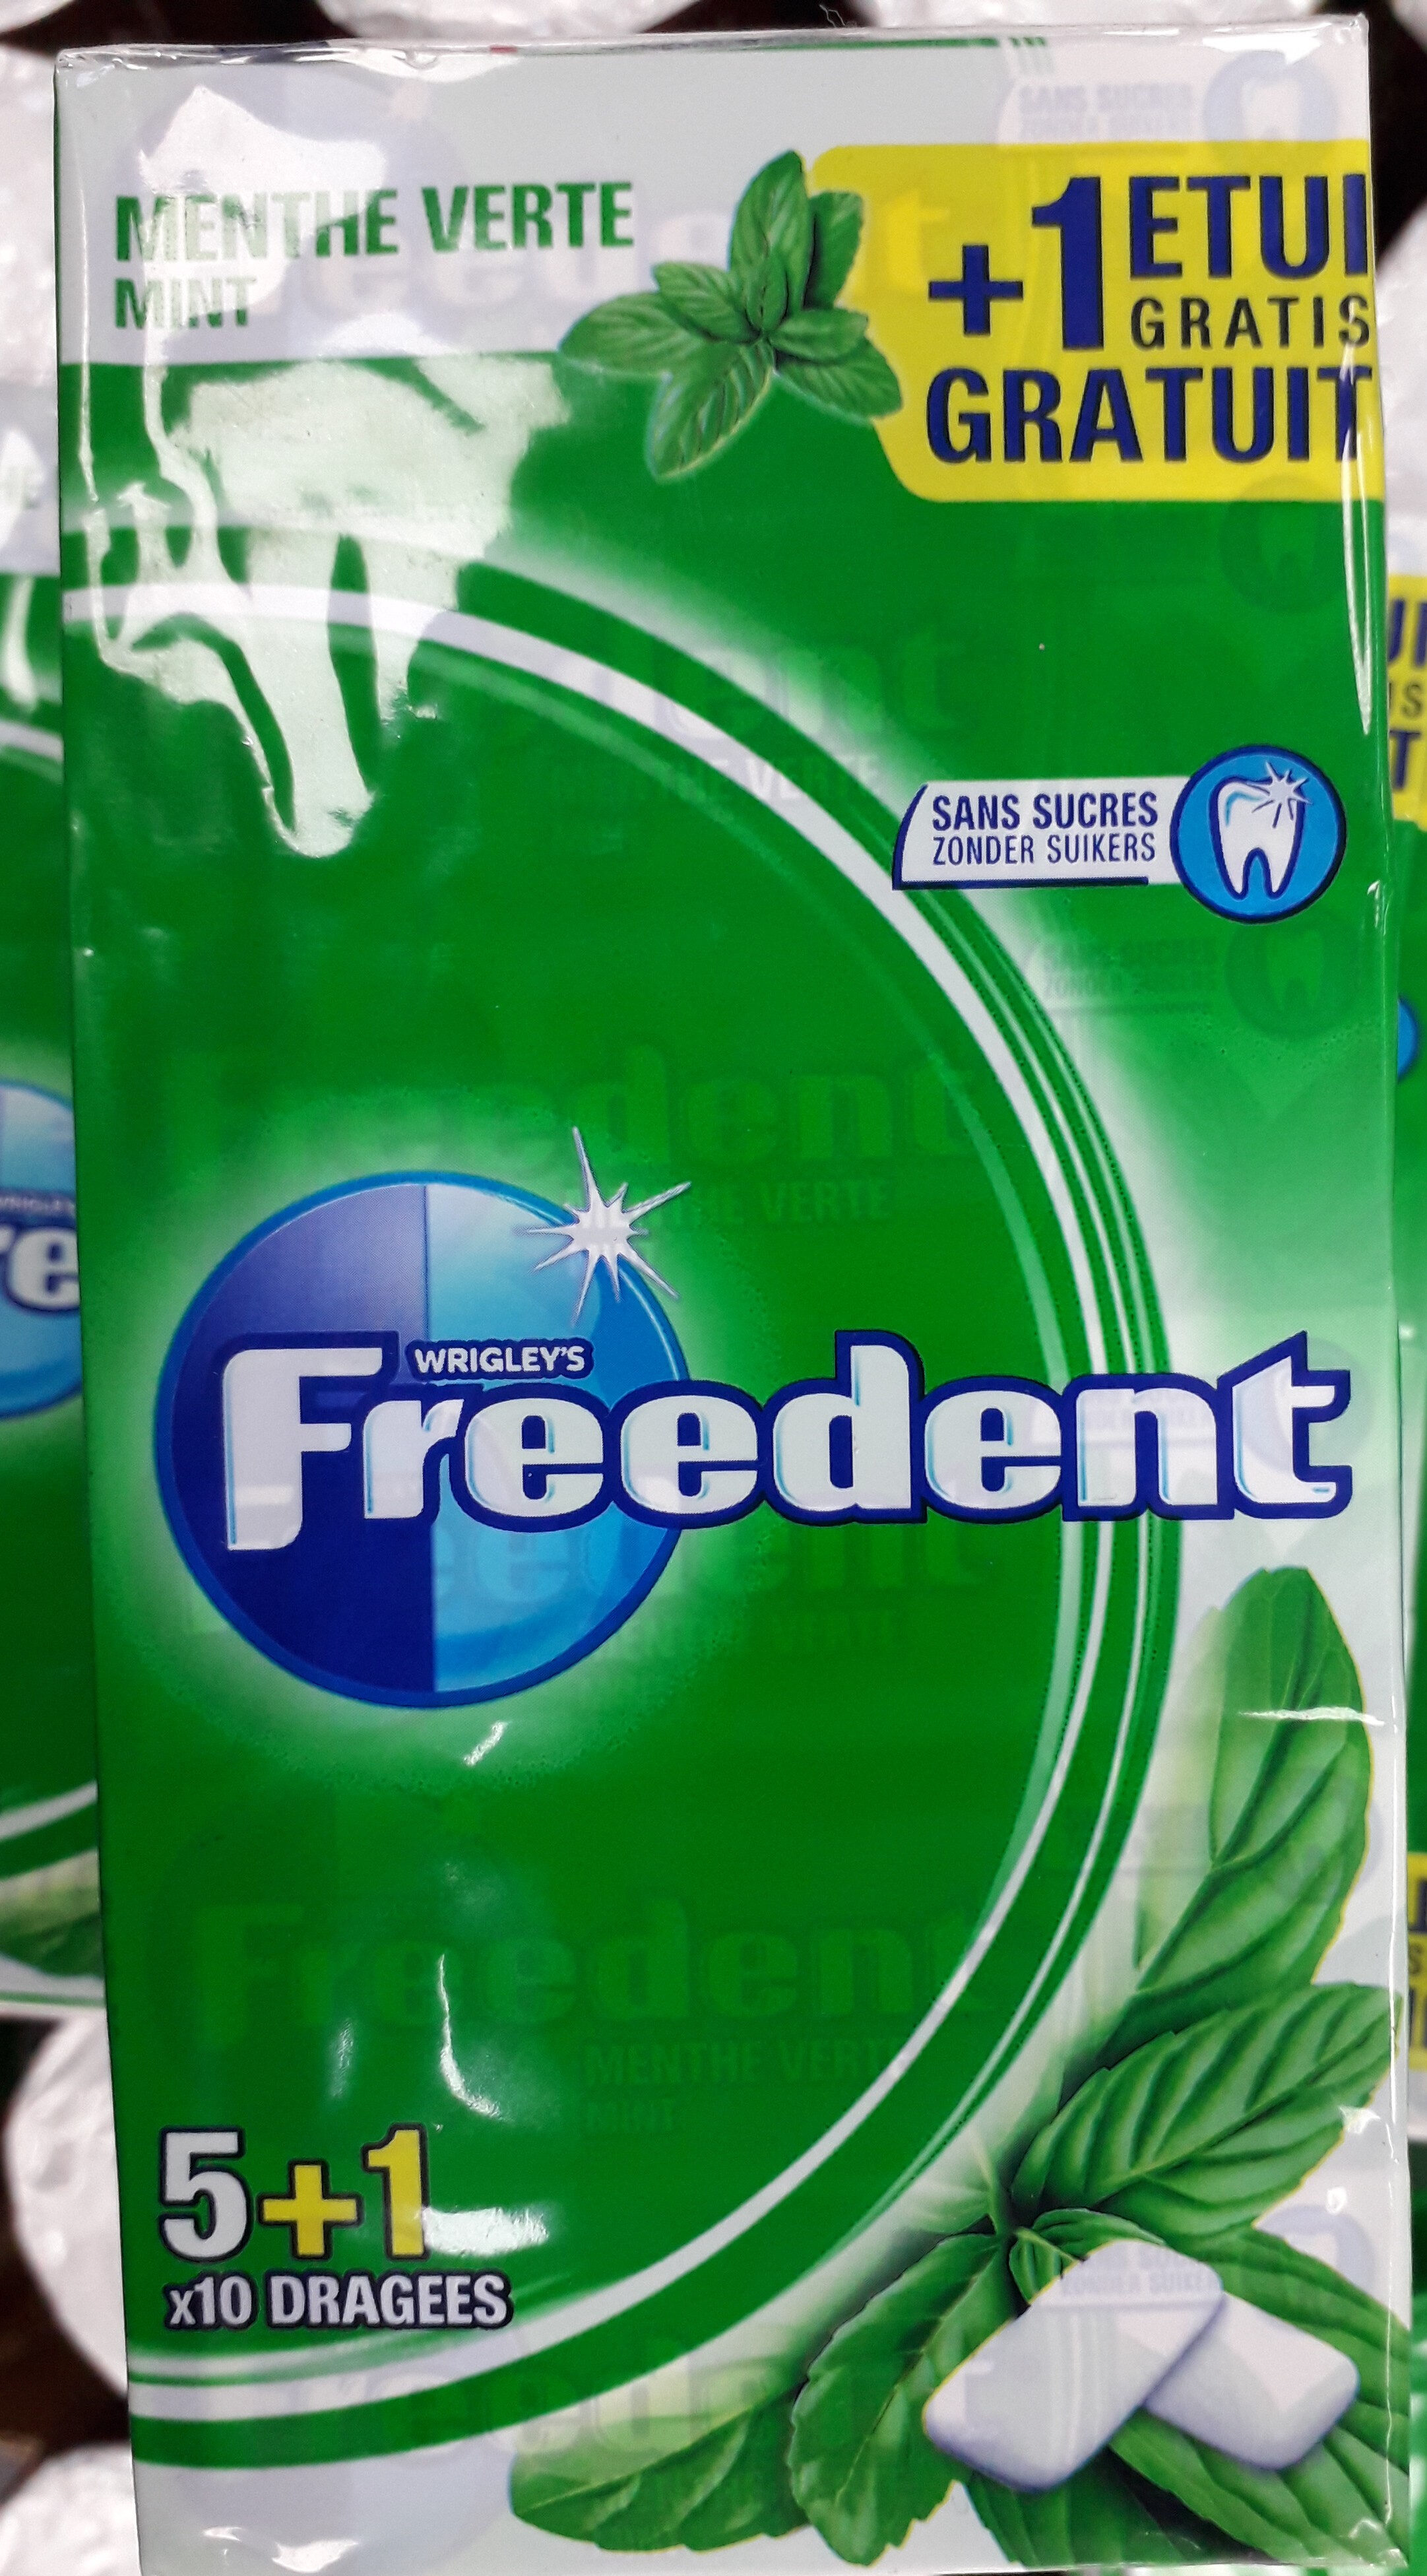 Freedent - menthe verte - Product - fr